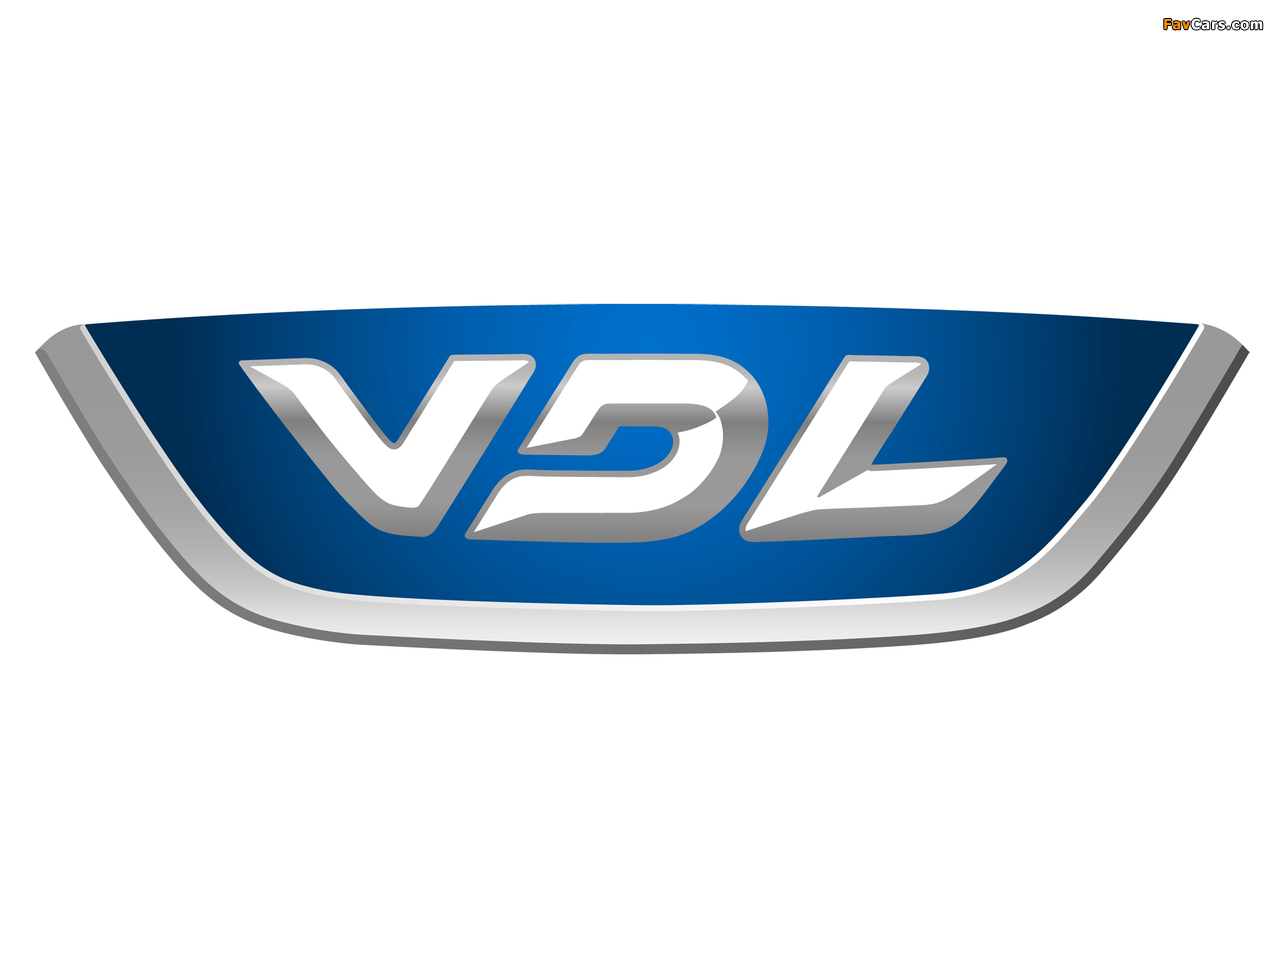 VDL images (1280 x 960)